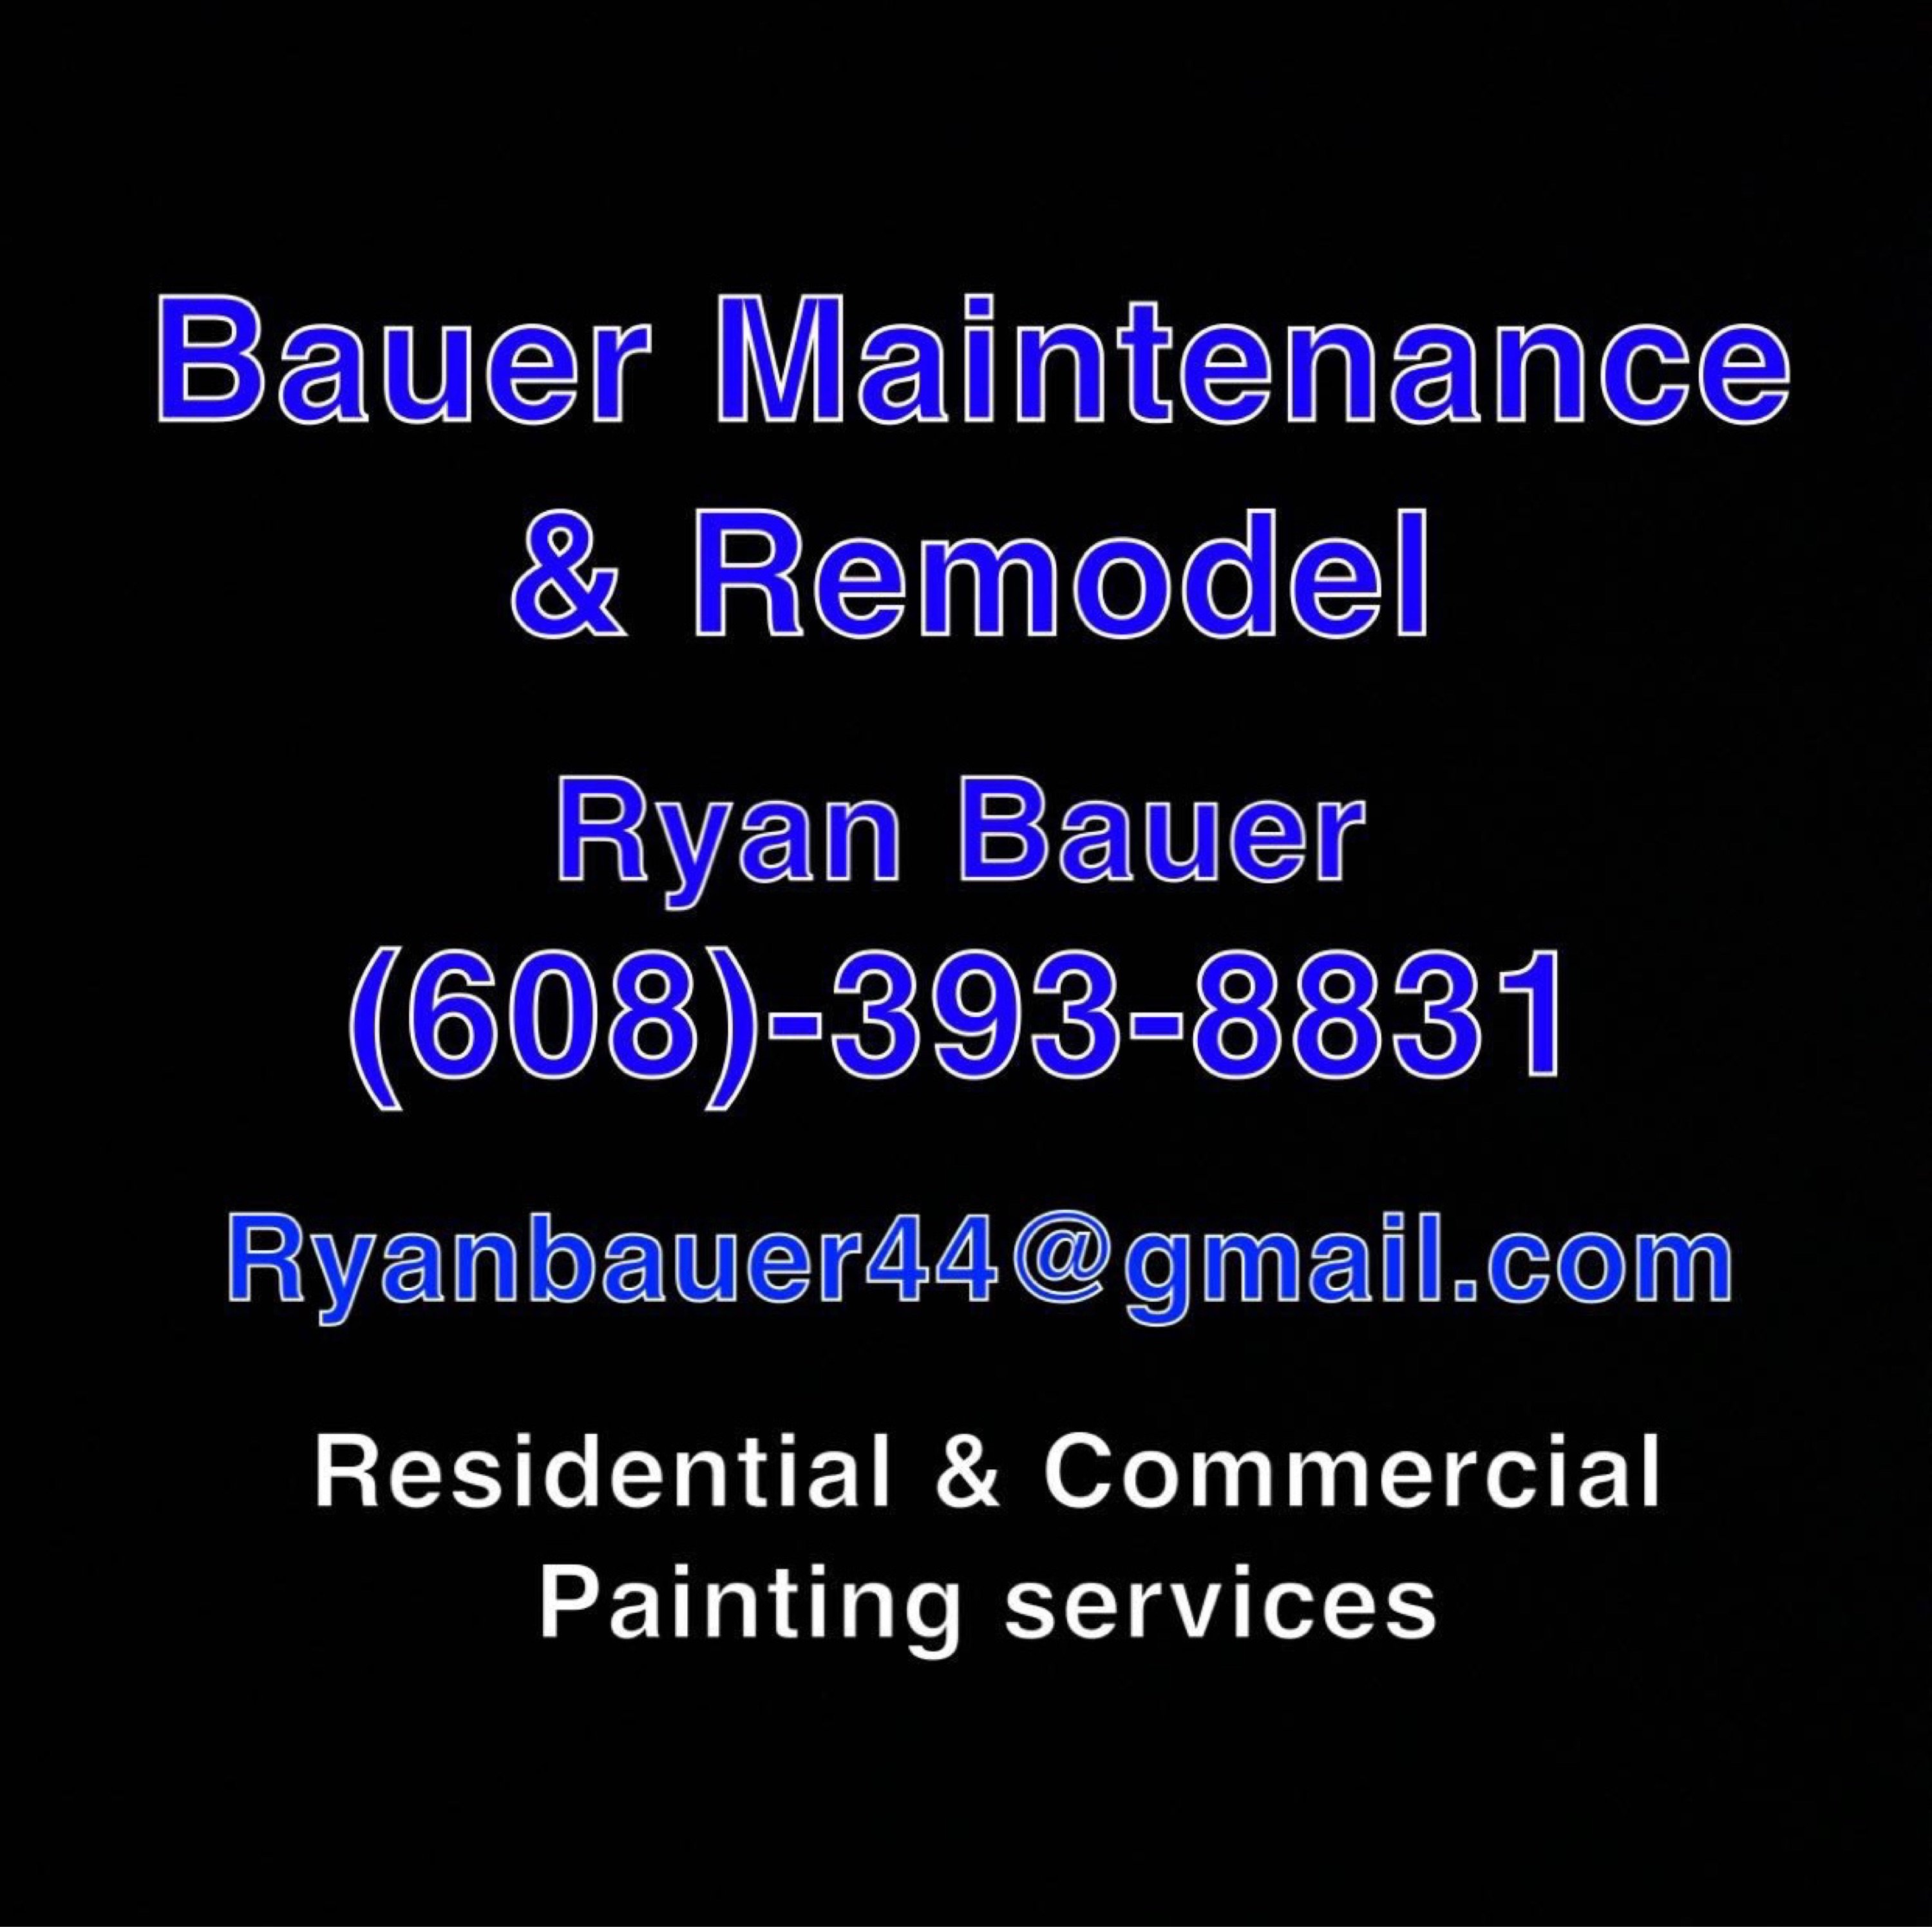 Bauer Maintenance & Remodel Logo